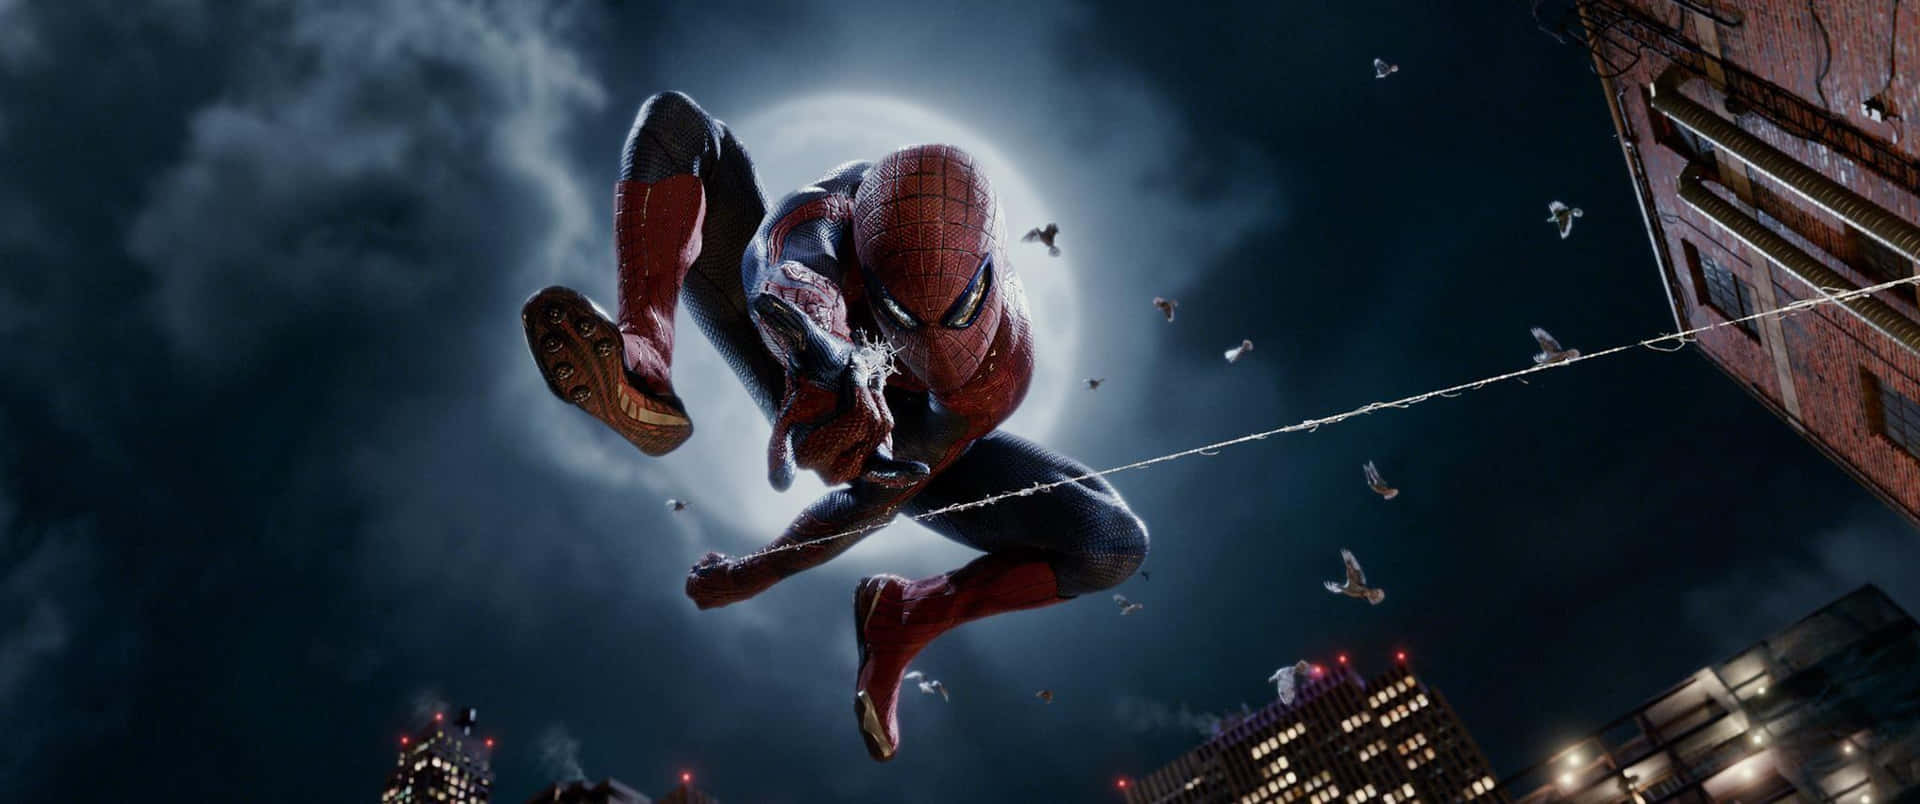 Image  Spider-Man 2 Movie Poster Wallpaper